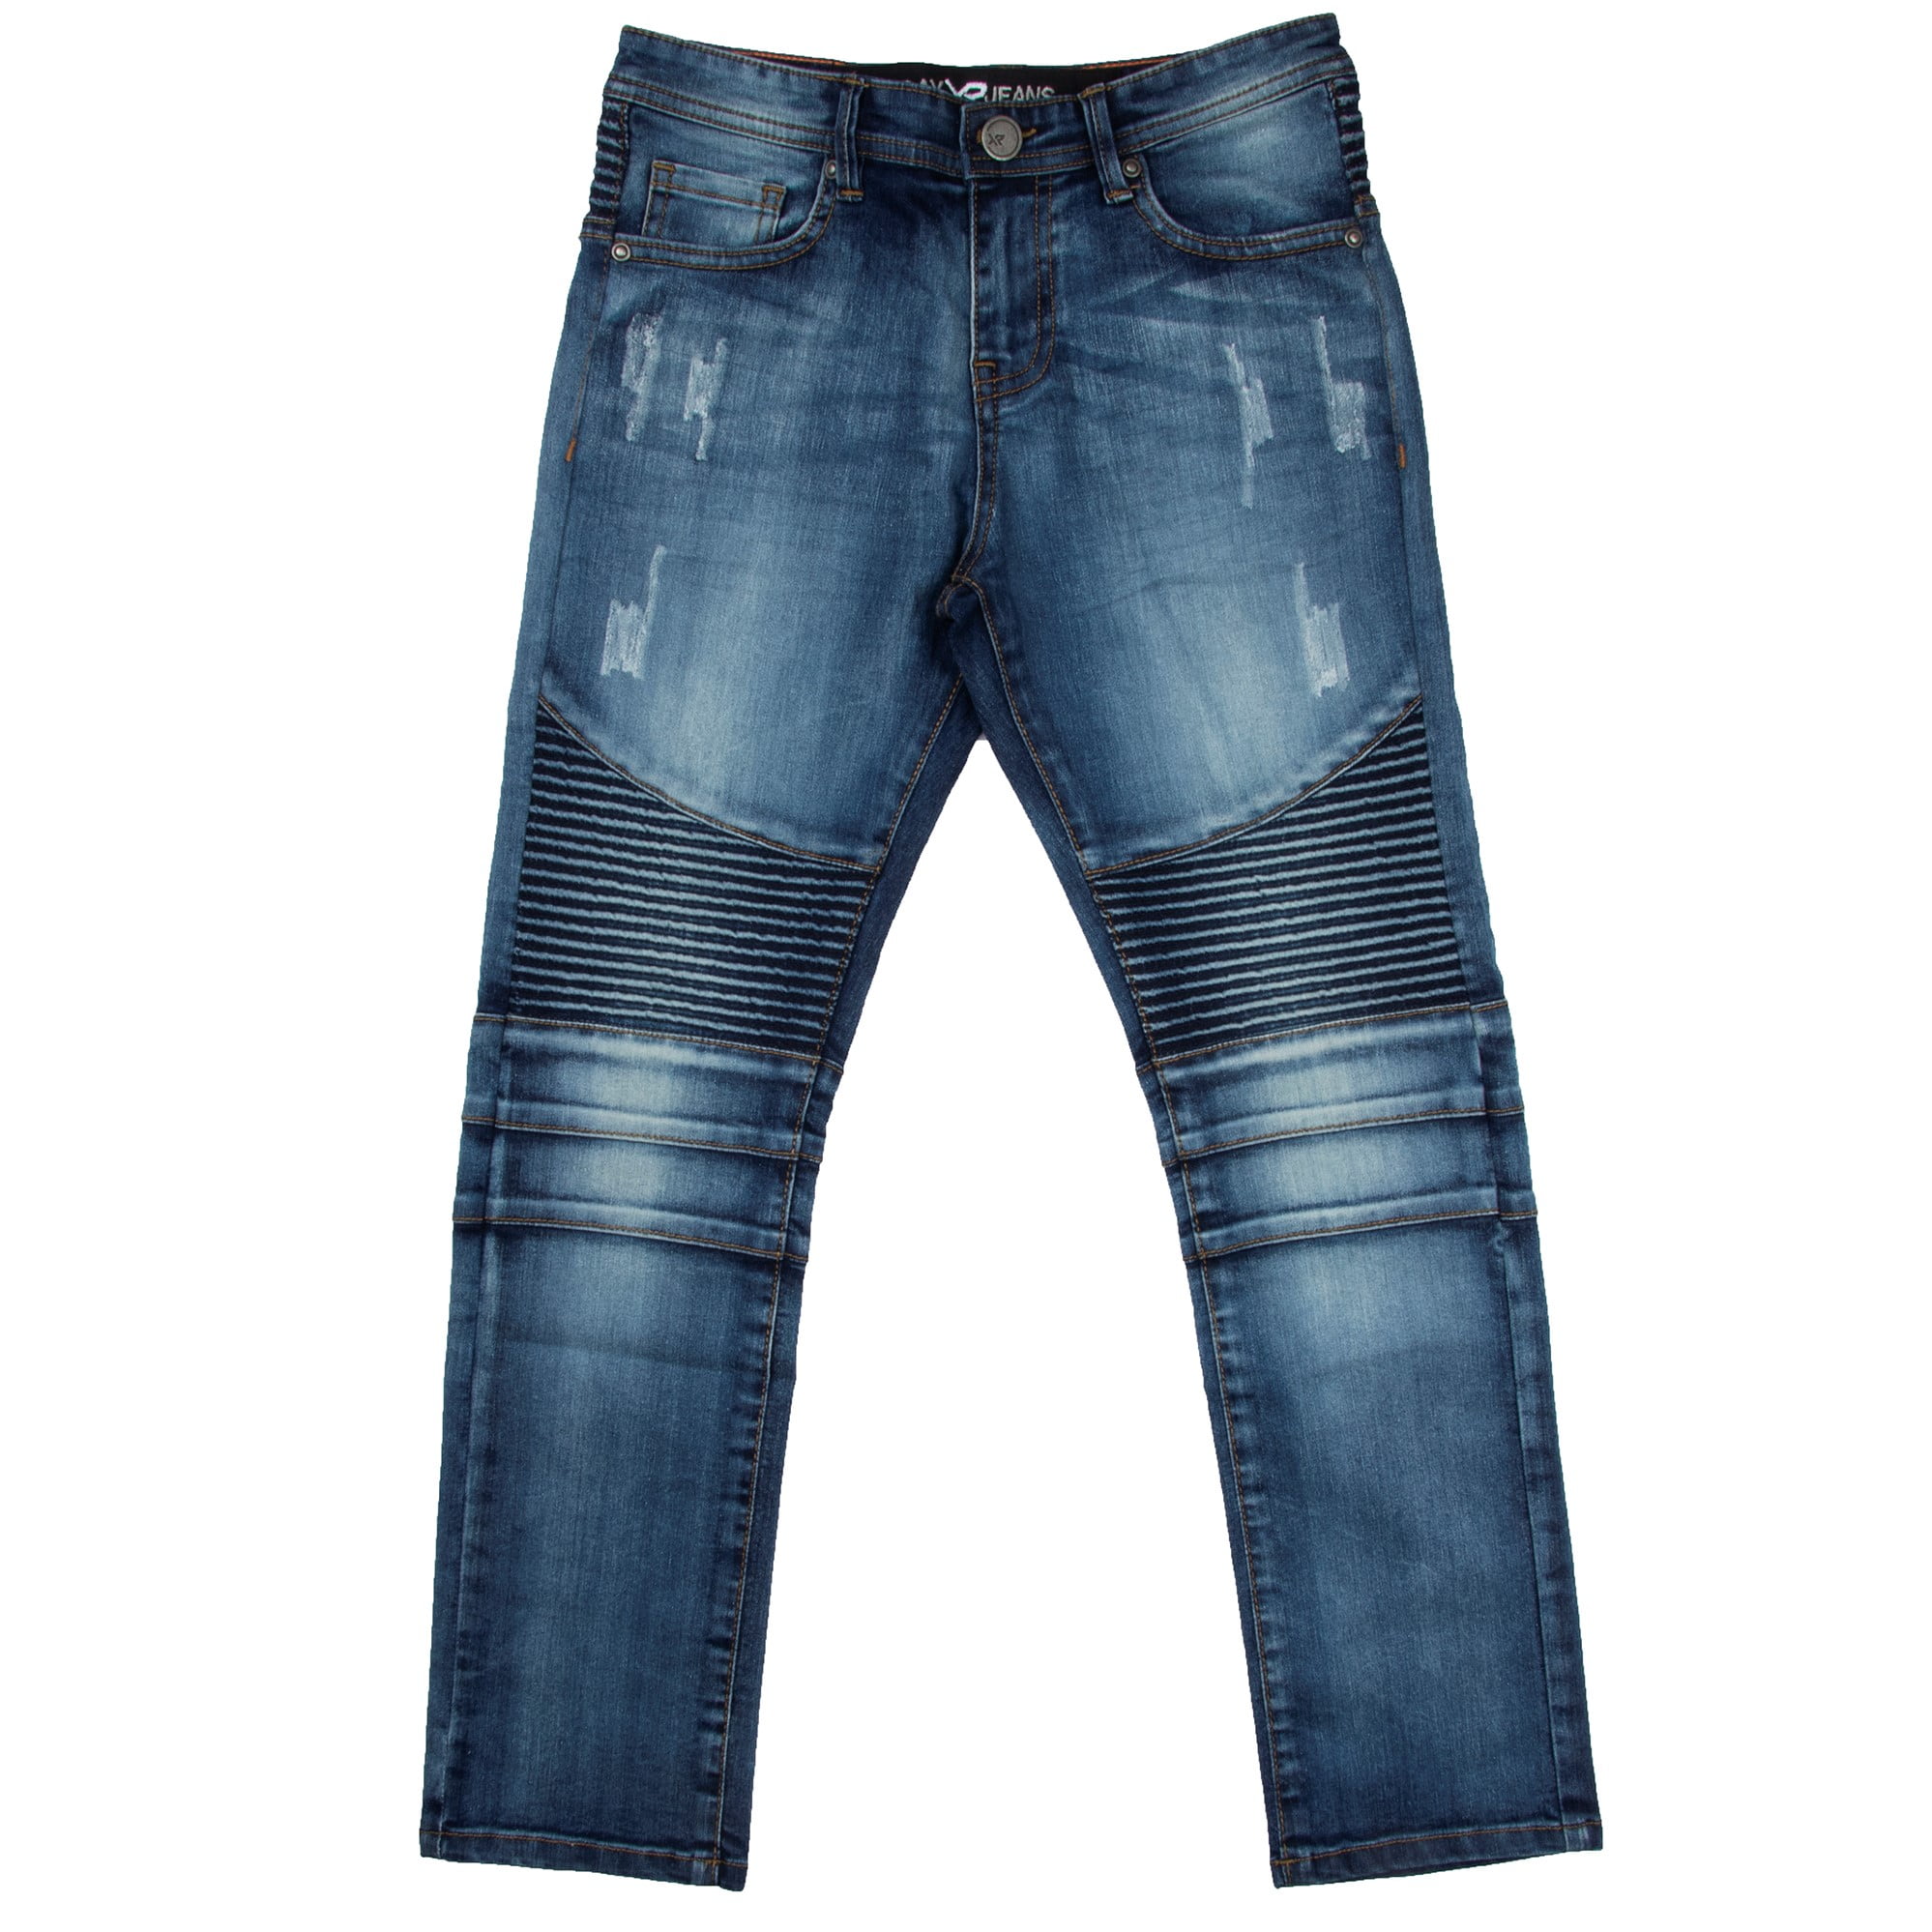 X RAY Slim Fit Biker Pants for Boys Distressed Skinny Moto Jeans 